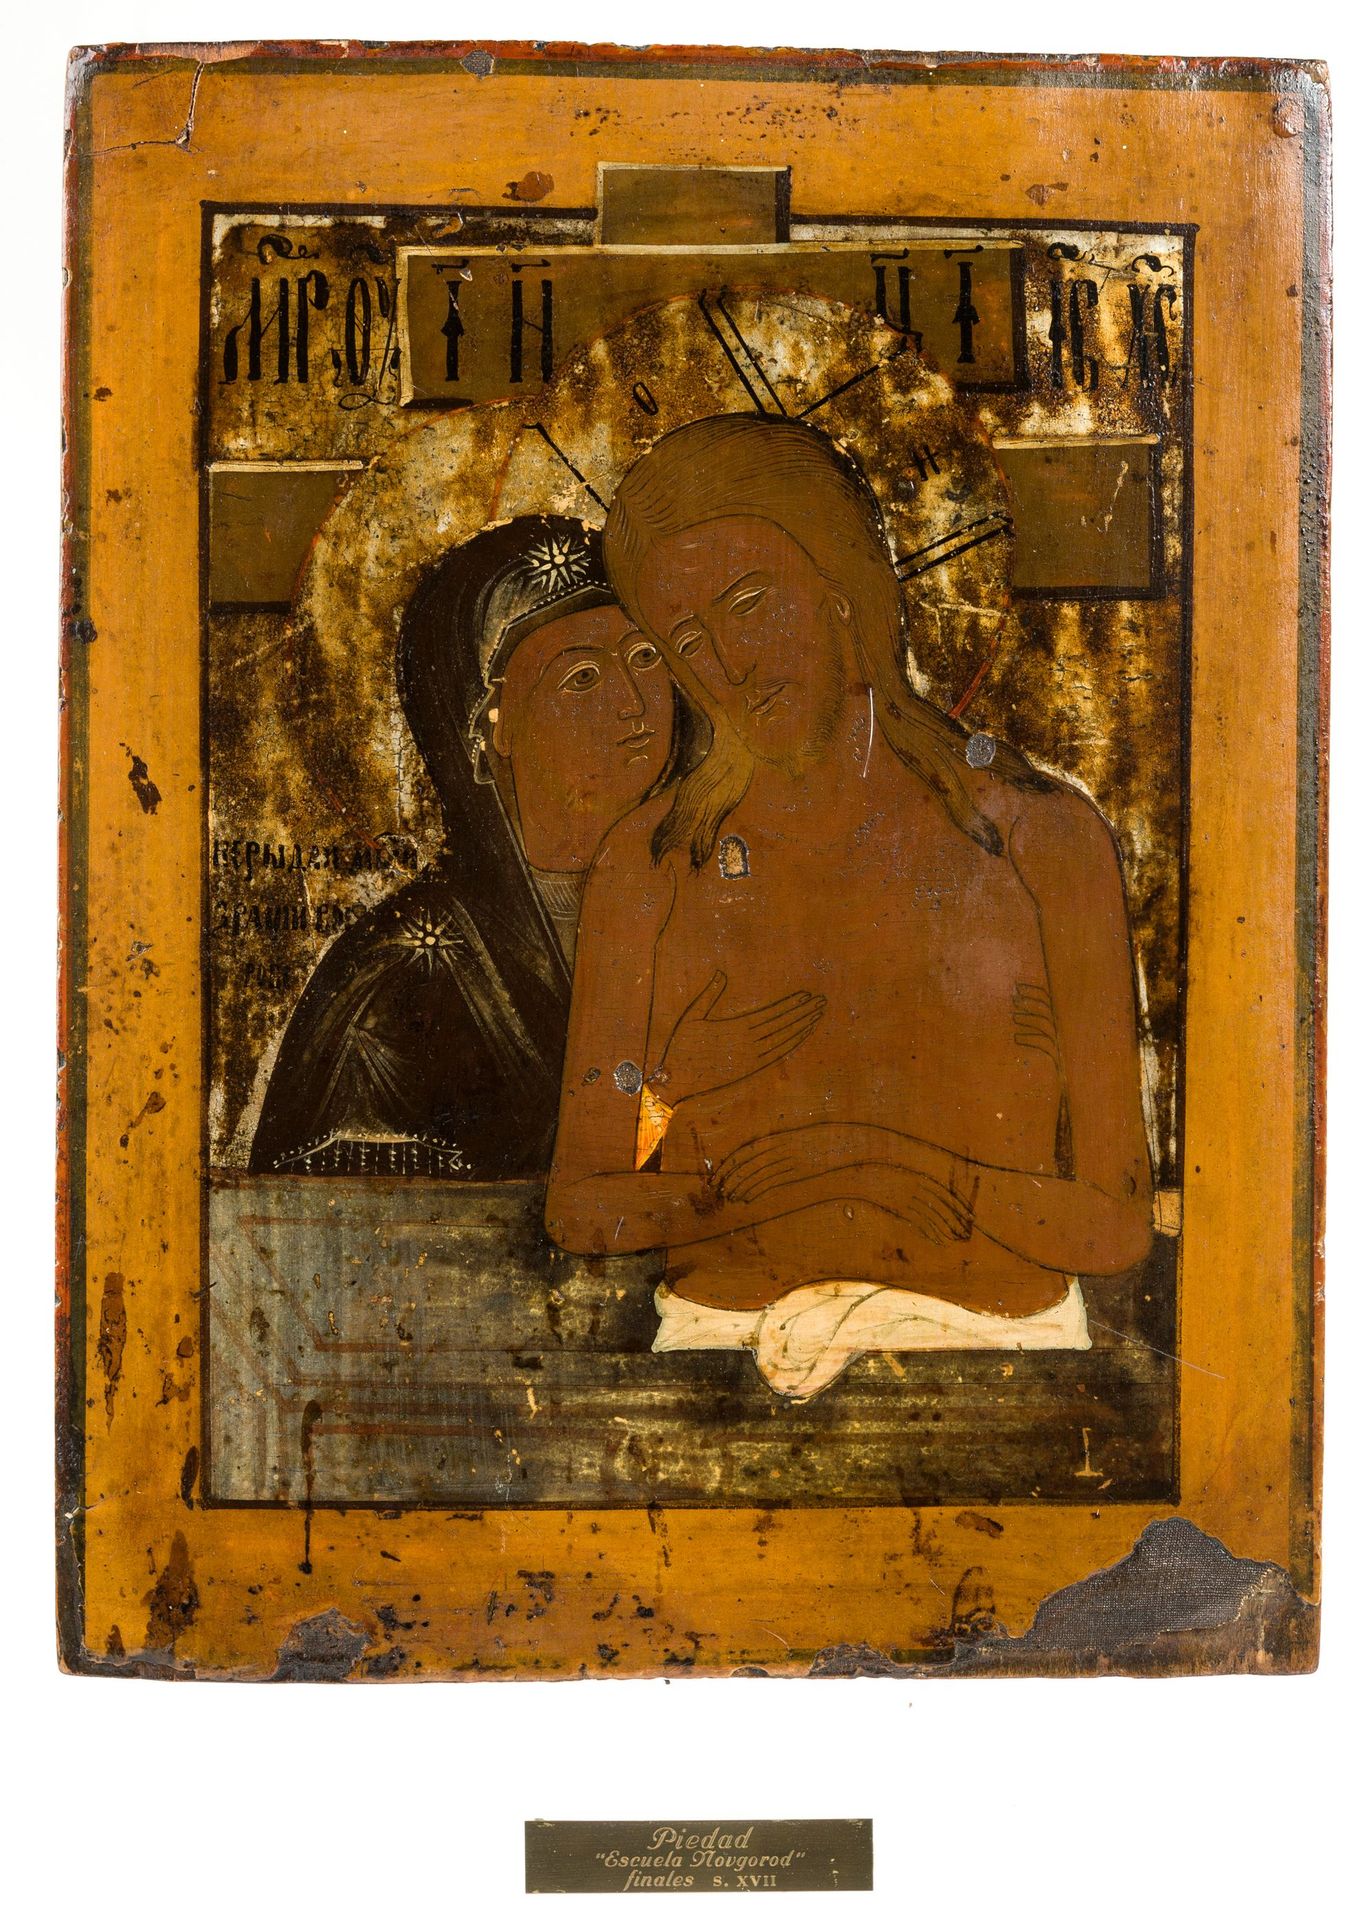 RUSIAN SCHOOL (C.18th / ) "Mercy" Tempera on panel. 32 x 24 cm